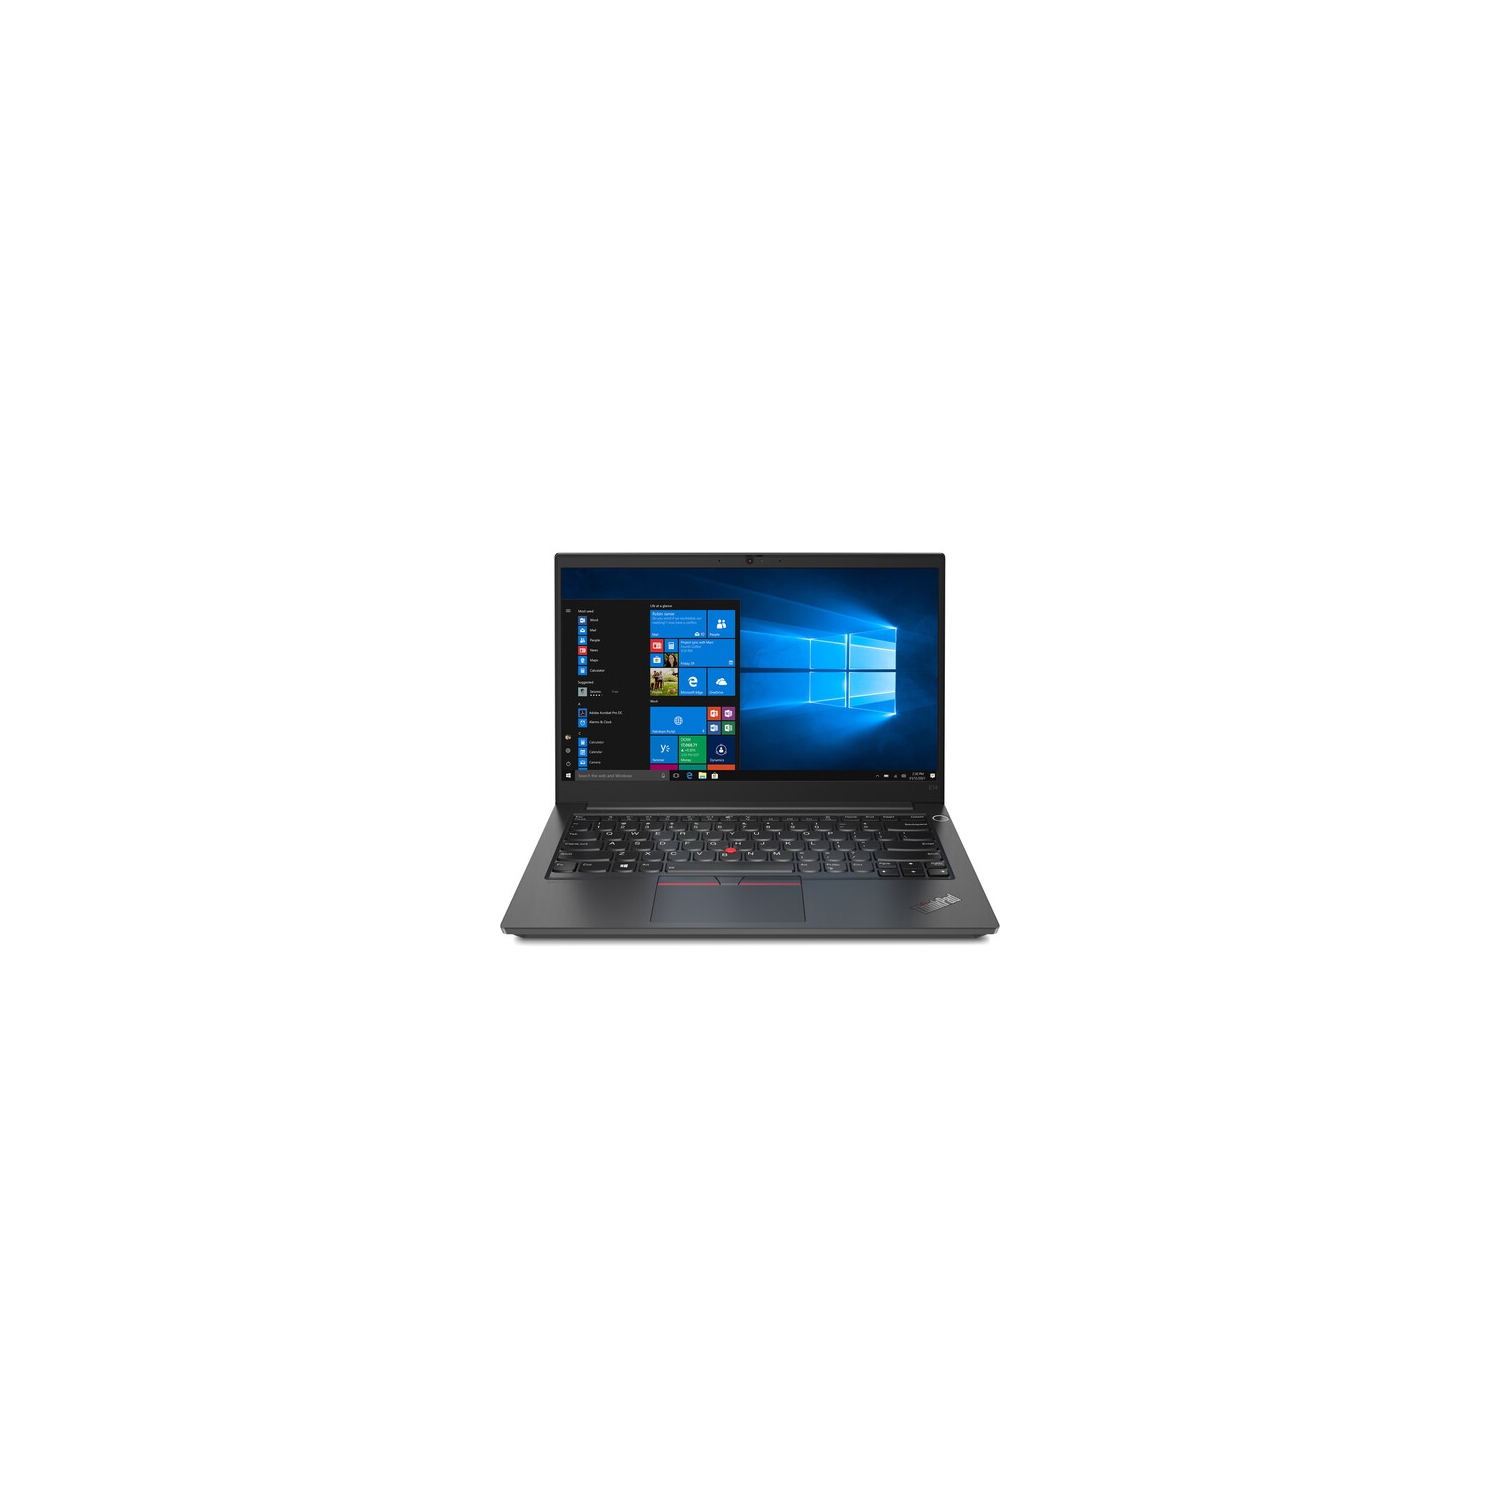 Lenovo ThinkPad E14 Gen 3 14" Laptop-Black(AMD Ryzen 7 5700U/256GB SSD/8GB RAM/Windows 10)-English (20Y70039US)